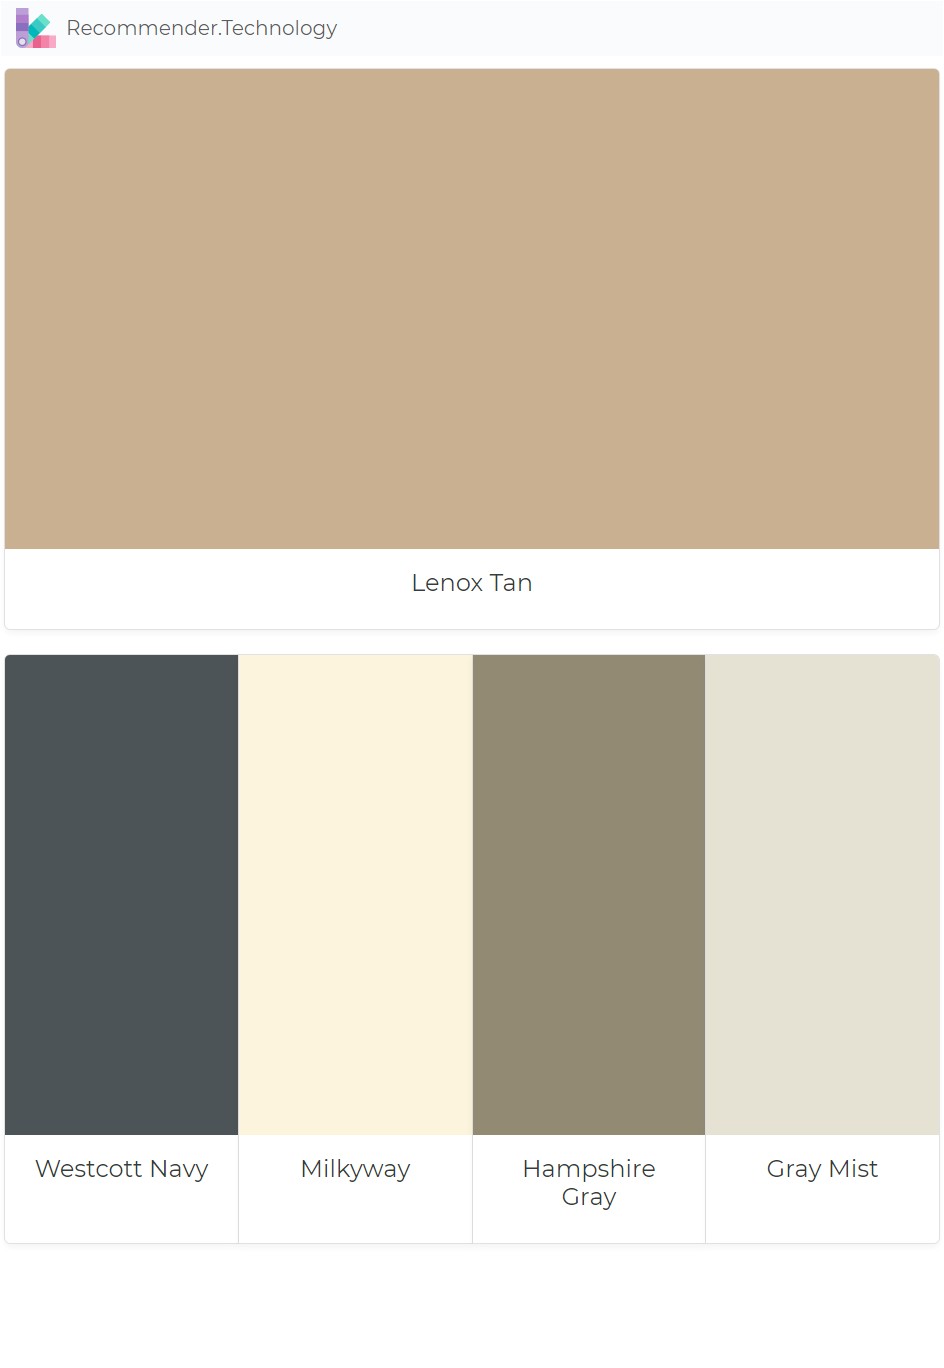 lenox tan westcott navy milkyway hampshire gray gray mist paint color palettes